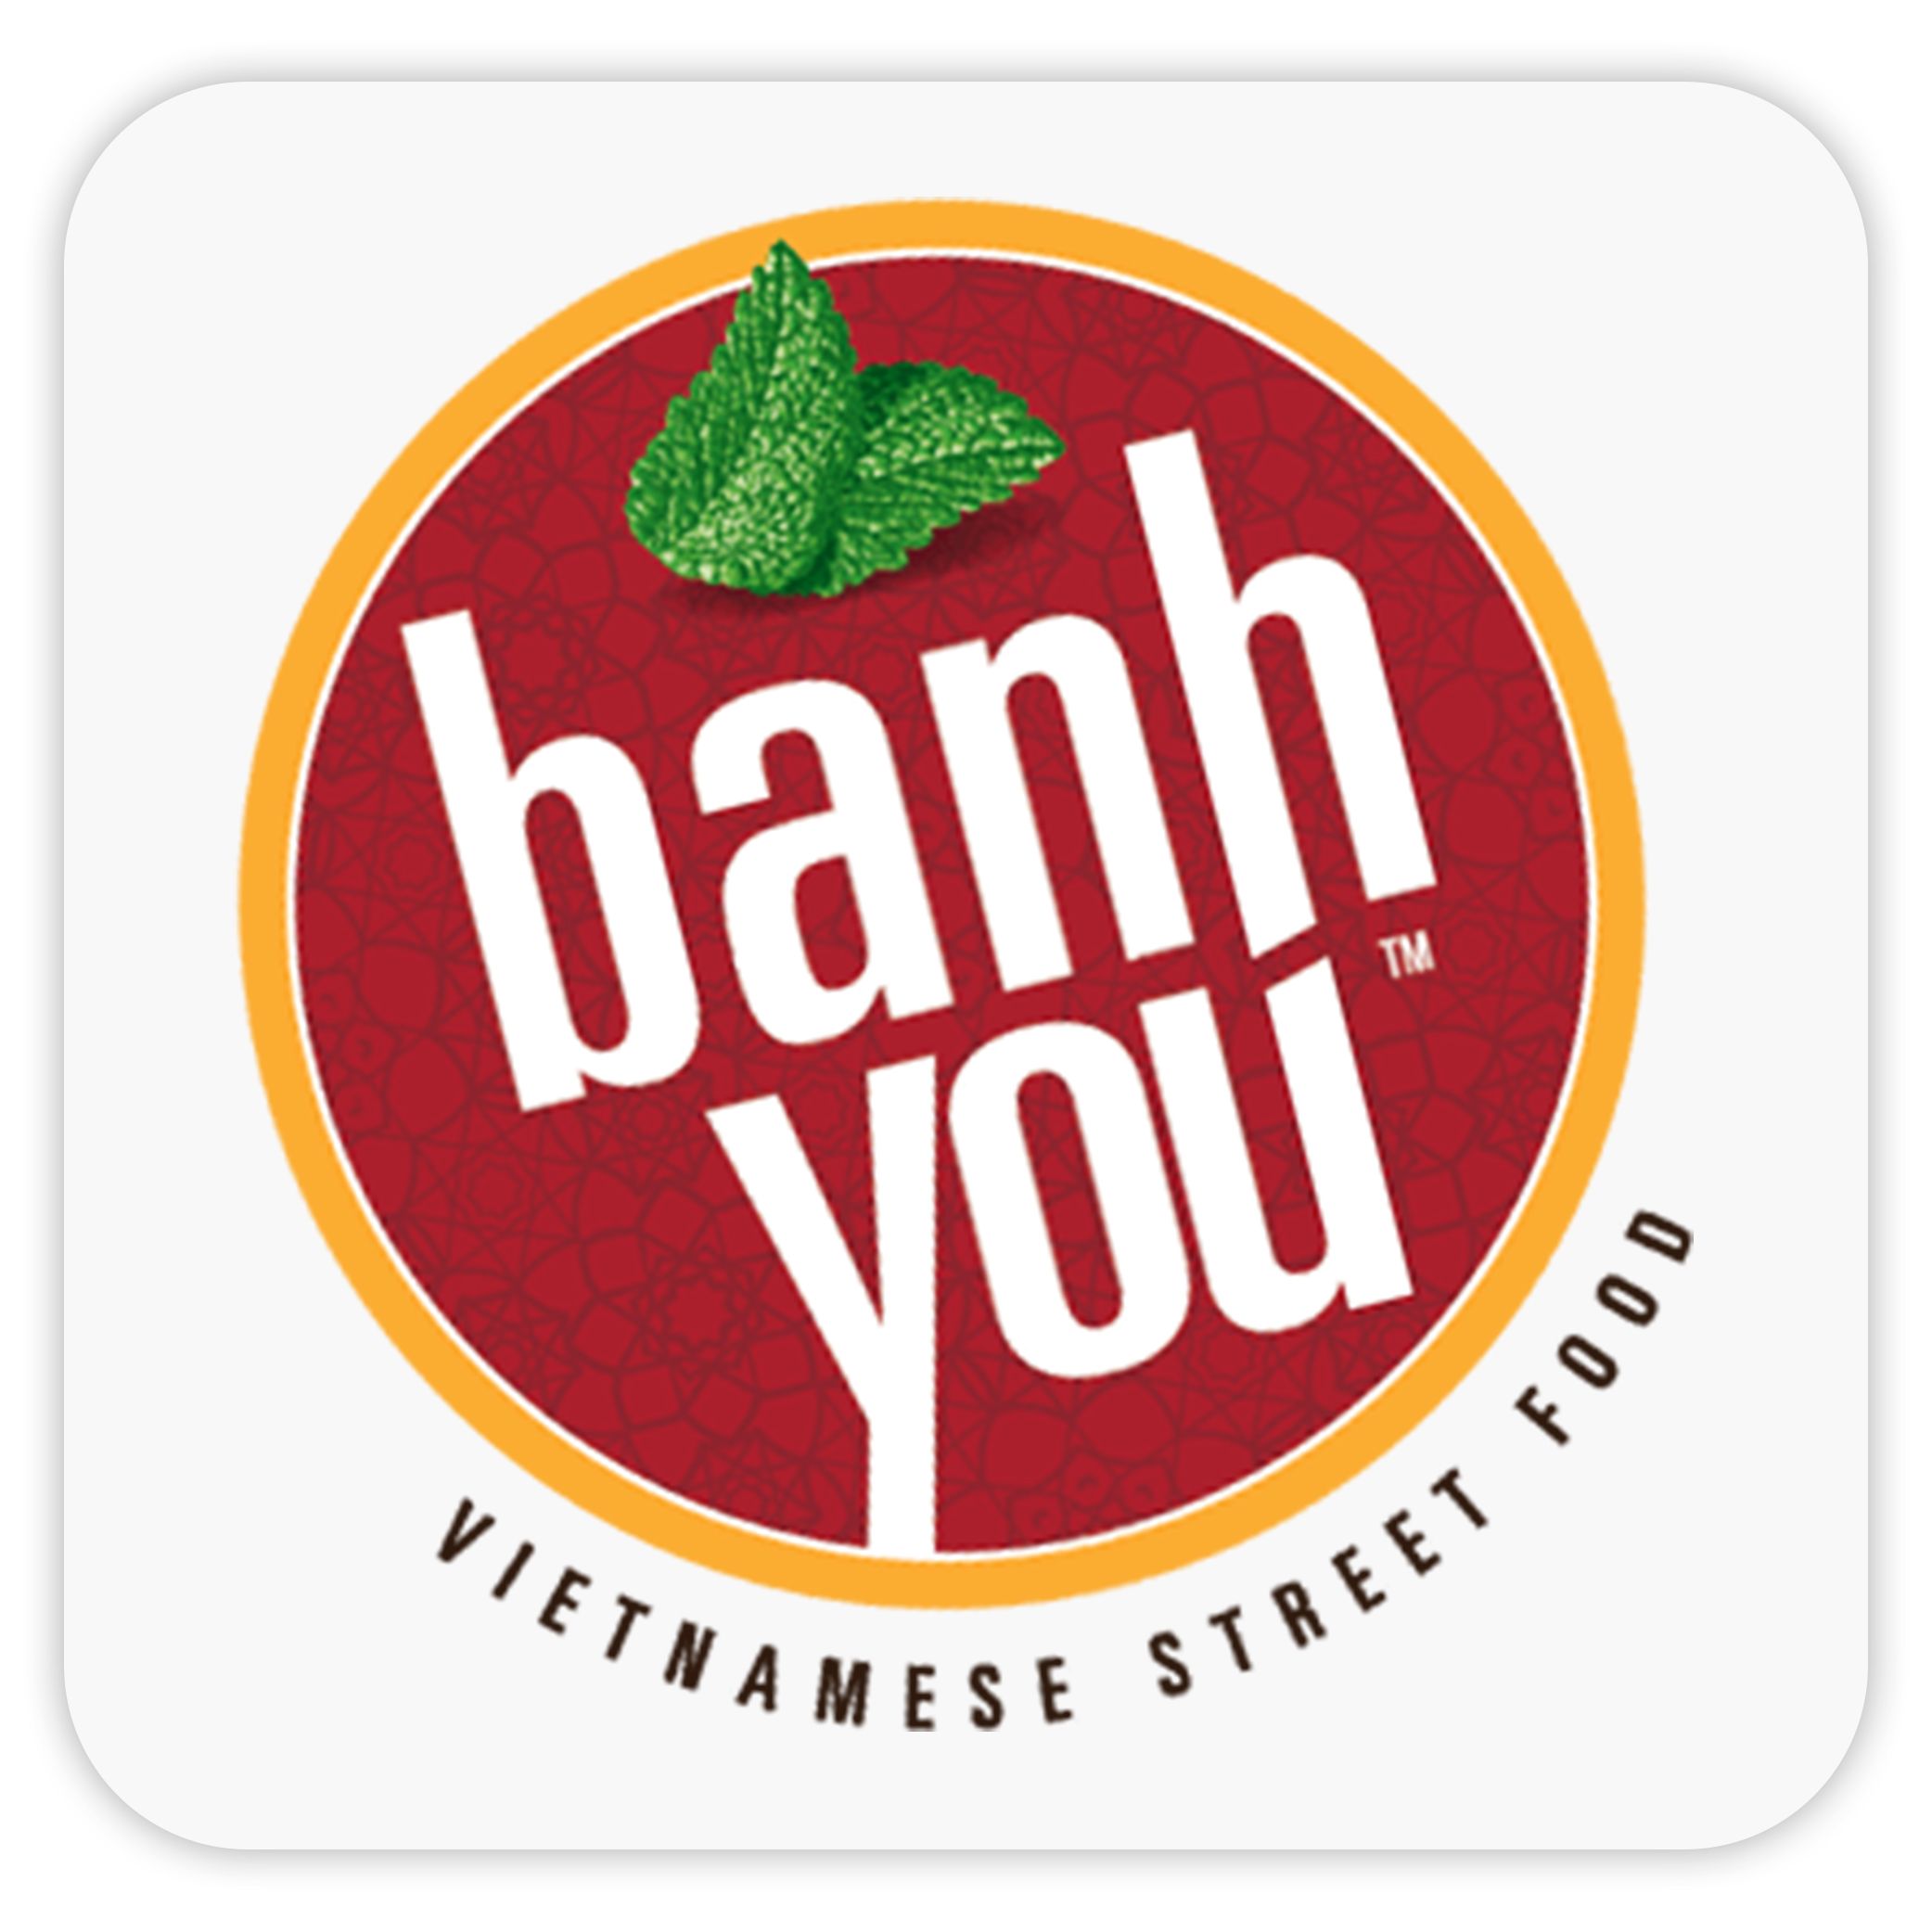 Banhyou Vietnamese Street Food